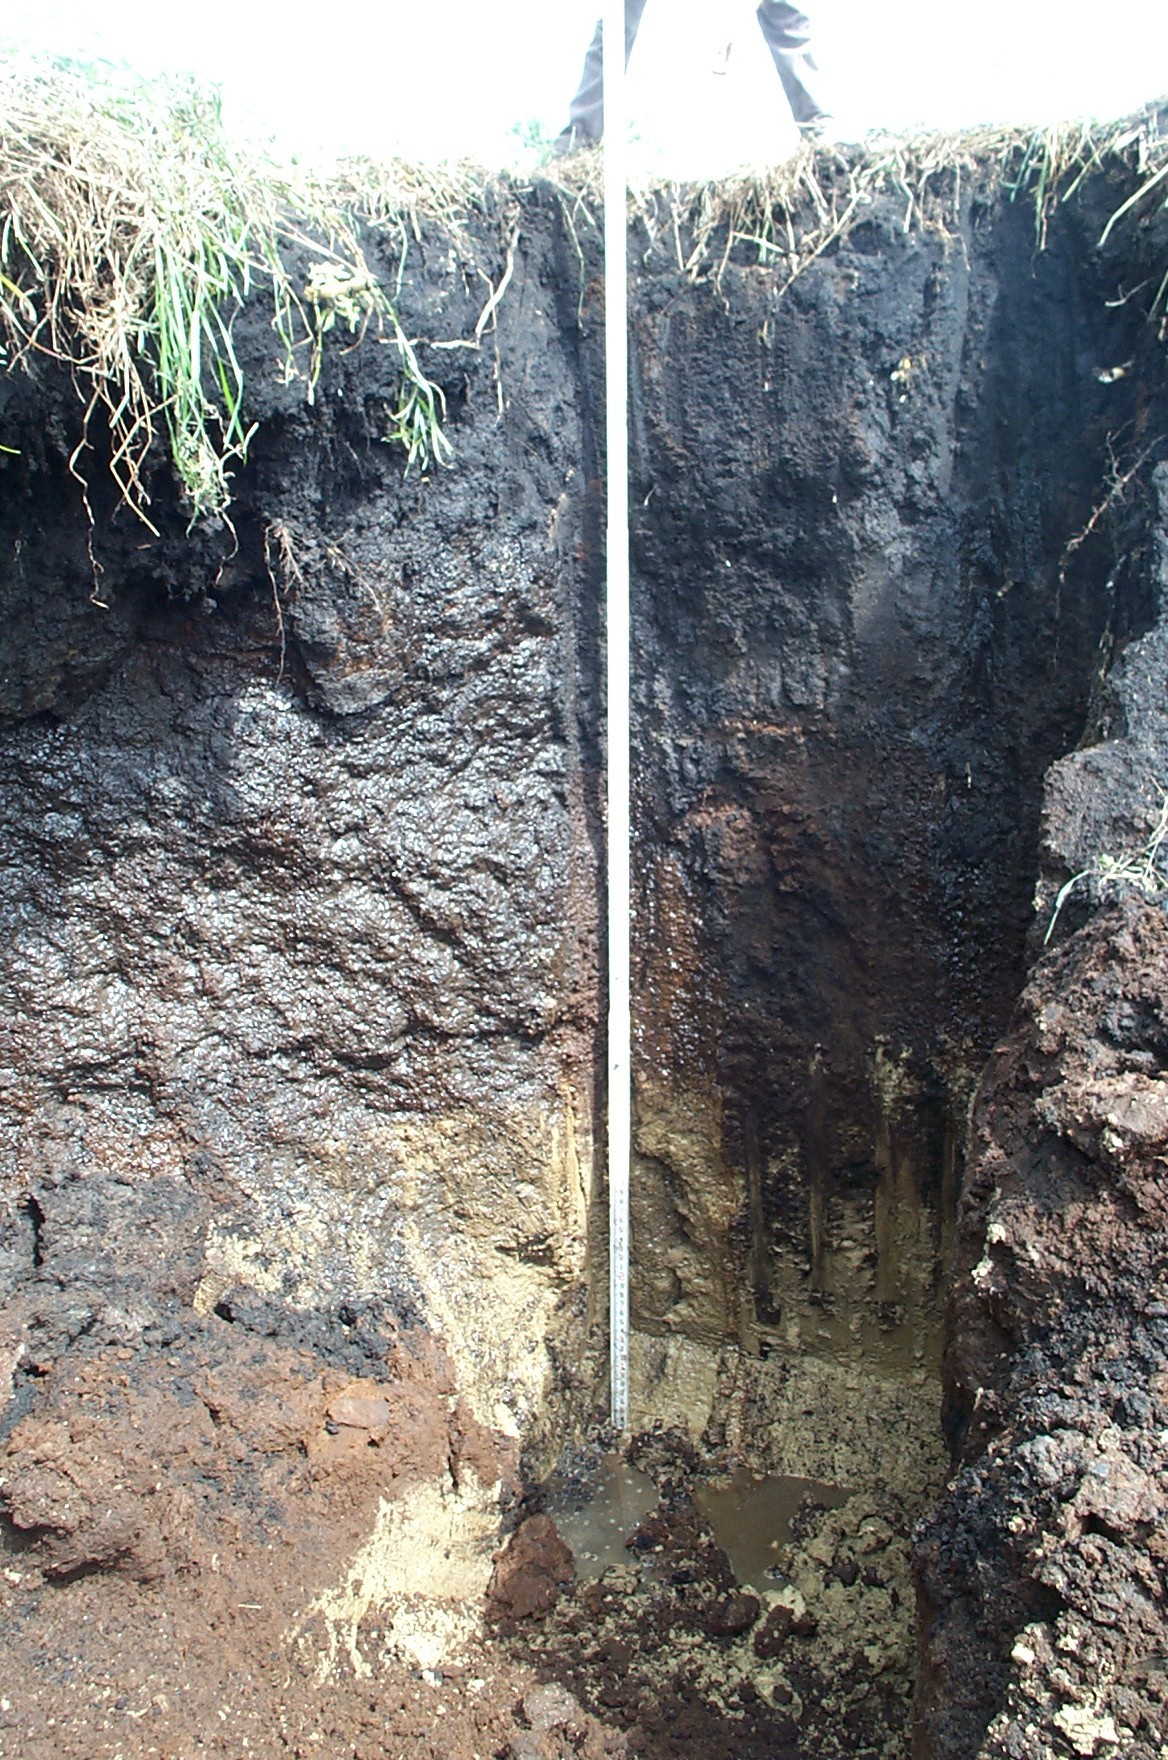 Organic rich soil overlying marl